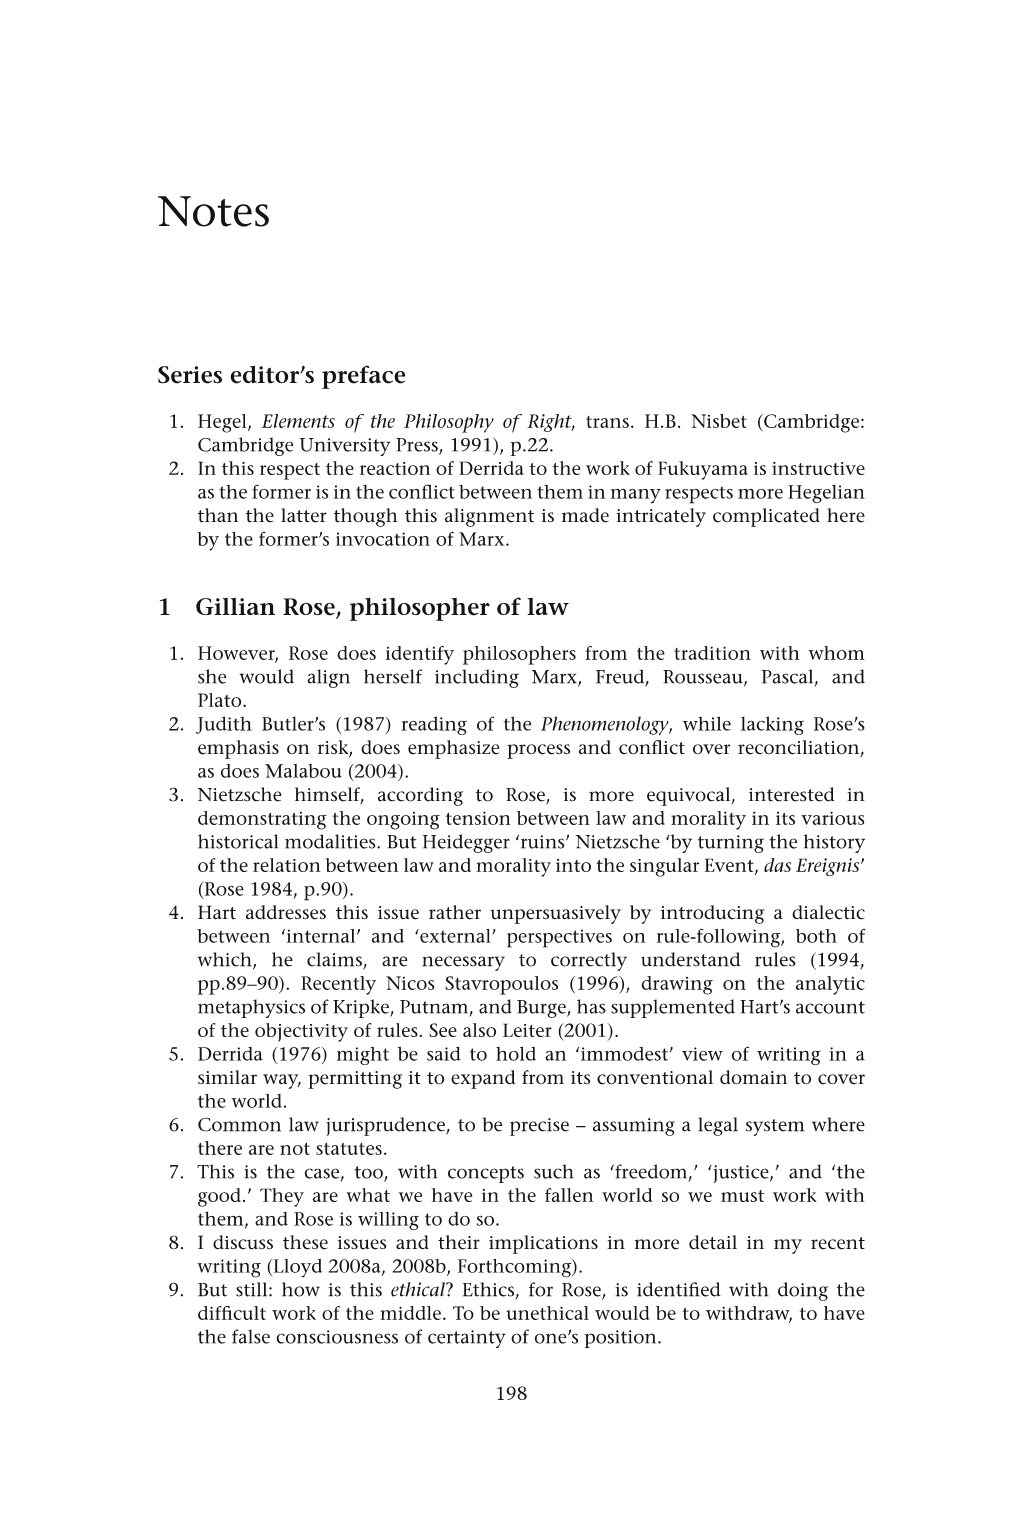 Series Editor's Preface 1 Gillian Rose, Philosopher Of